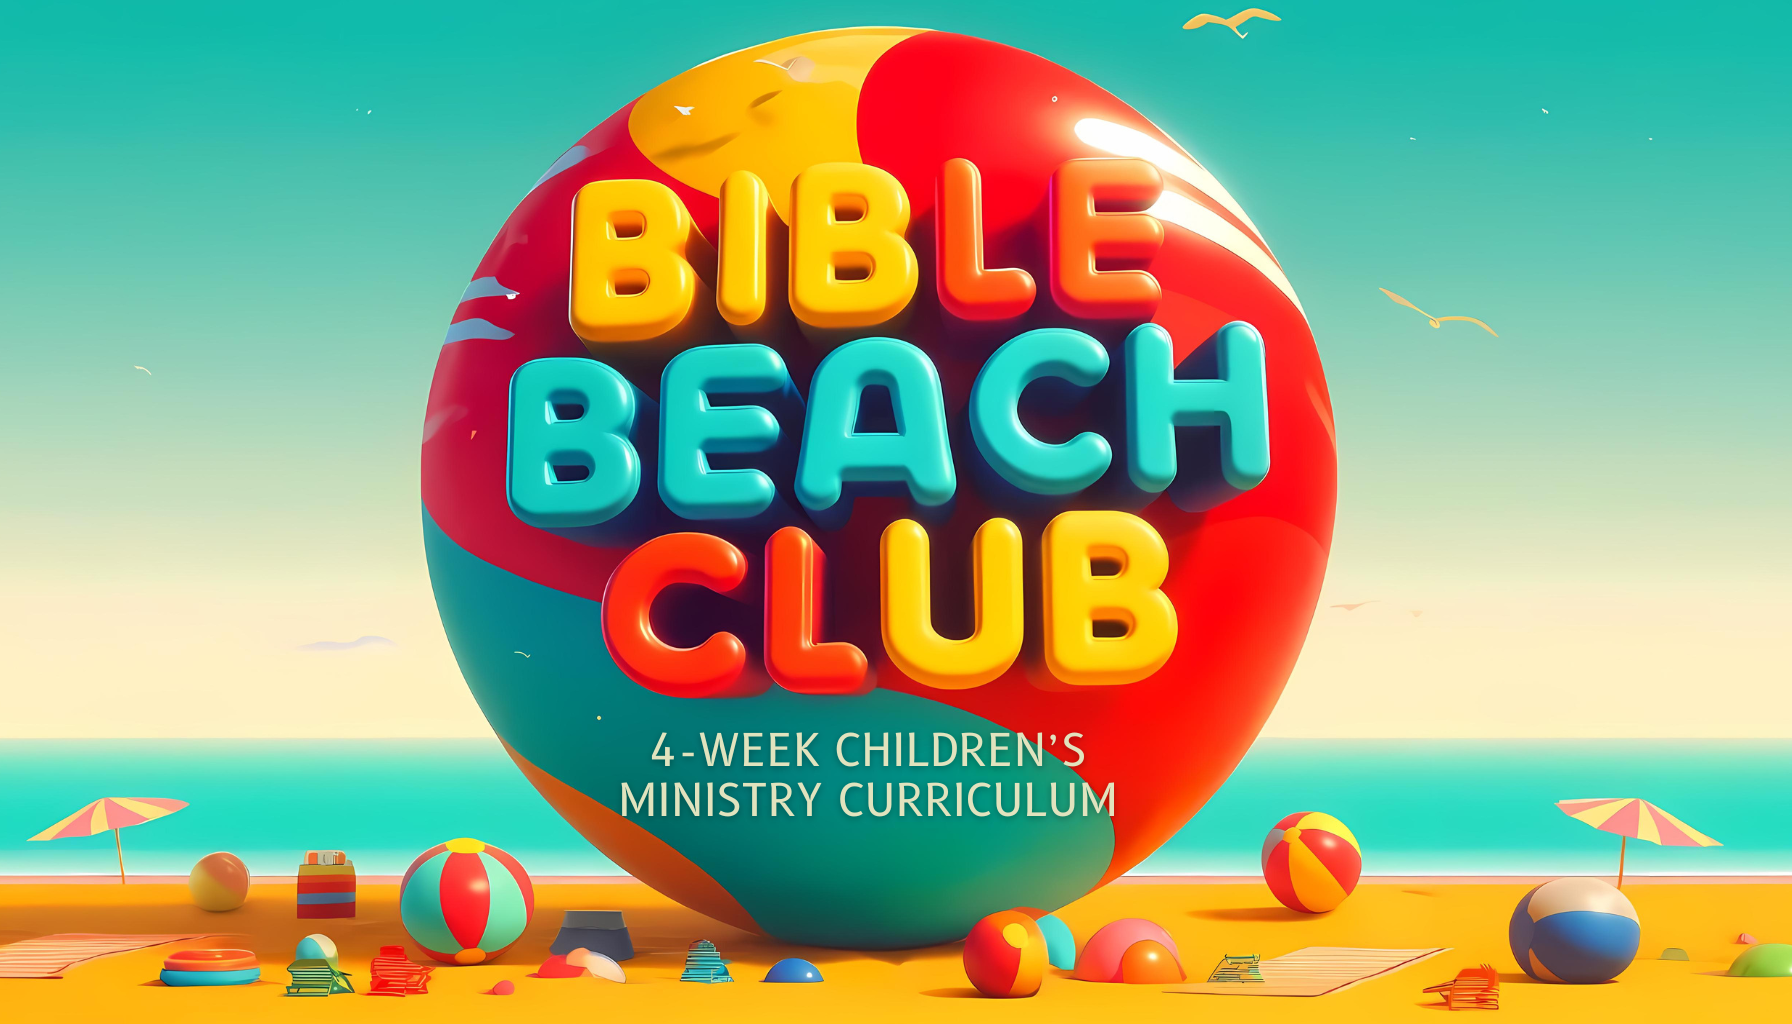 Bible Beack Club 4-WEEK CHILDREN’S MINISTRY CURRICULUM for Kids